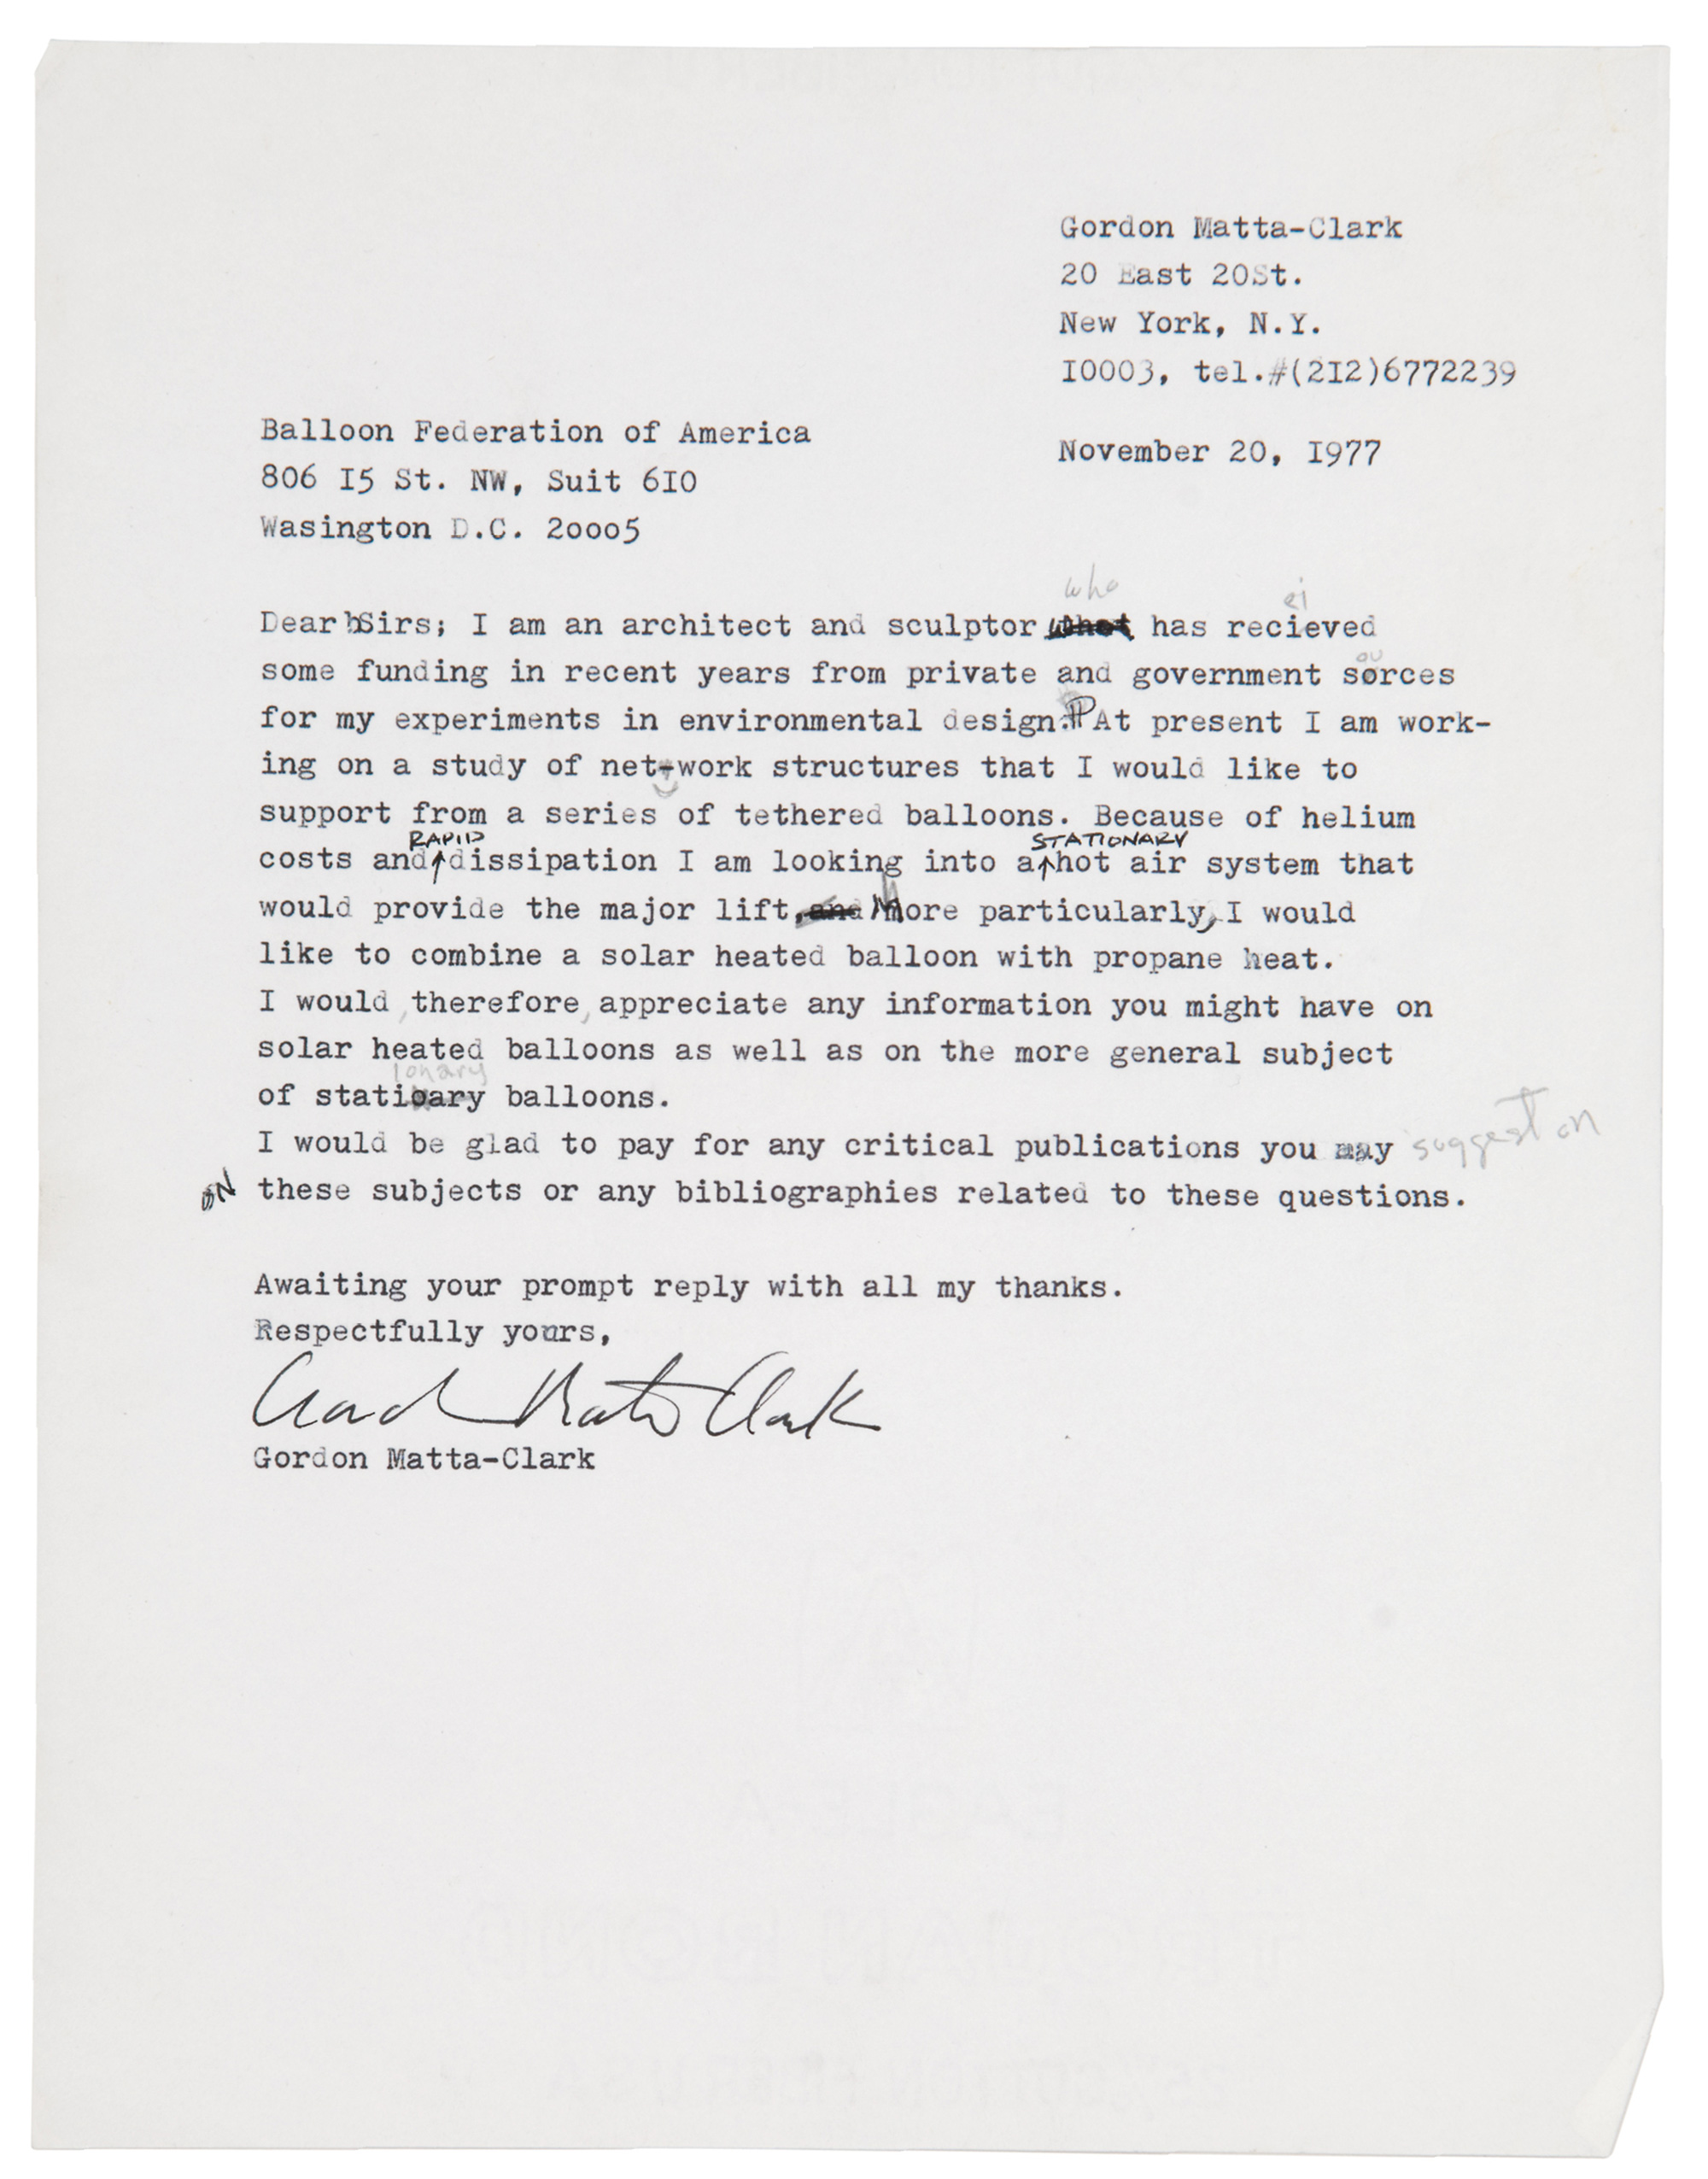 A nineteen seventy-seven letter from Gordon Matta-Clark to the Balloon Federation of America. 